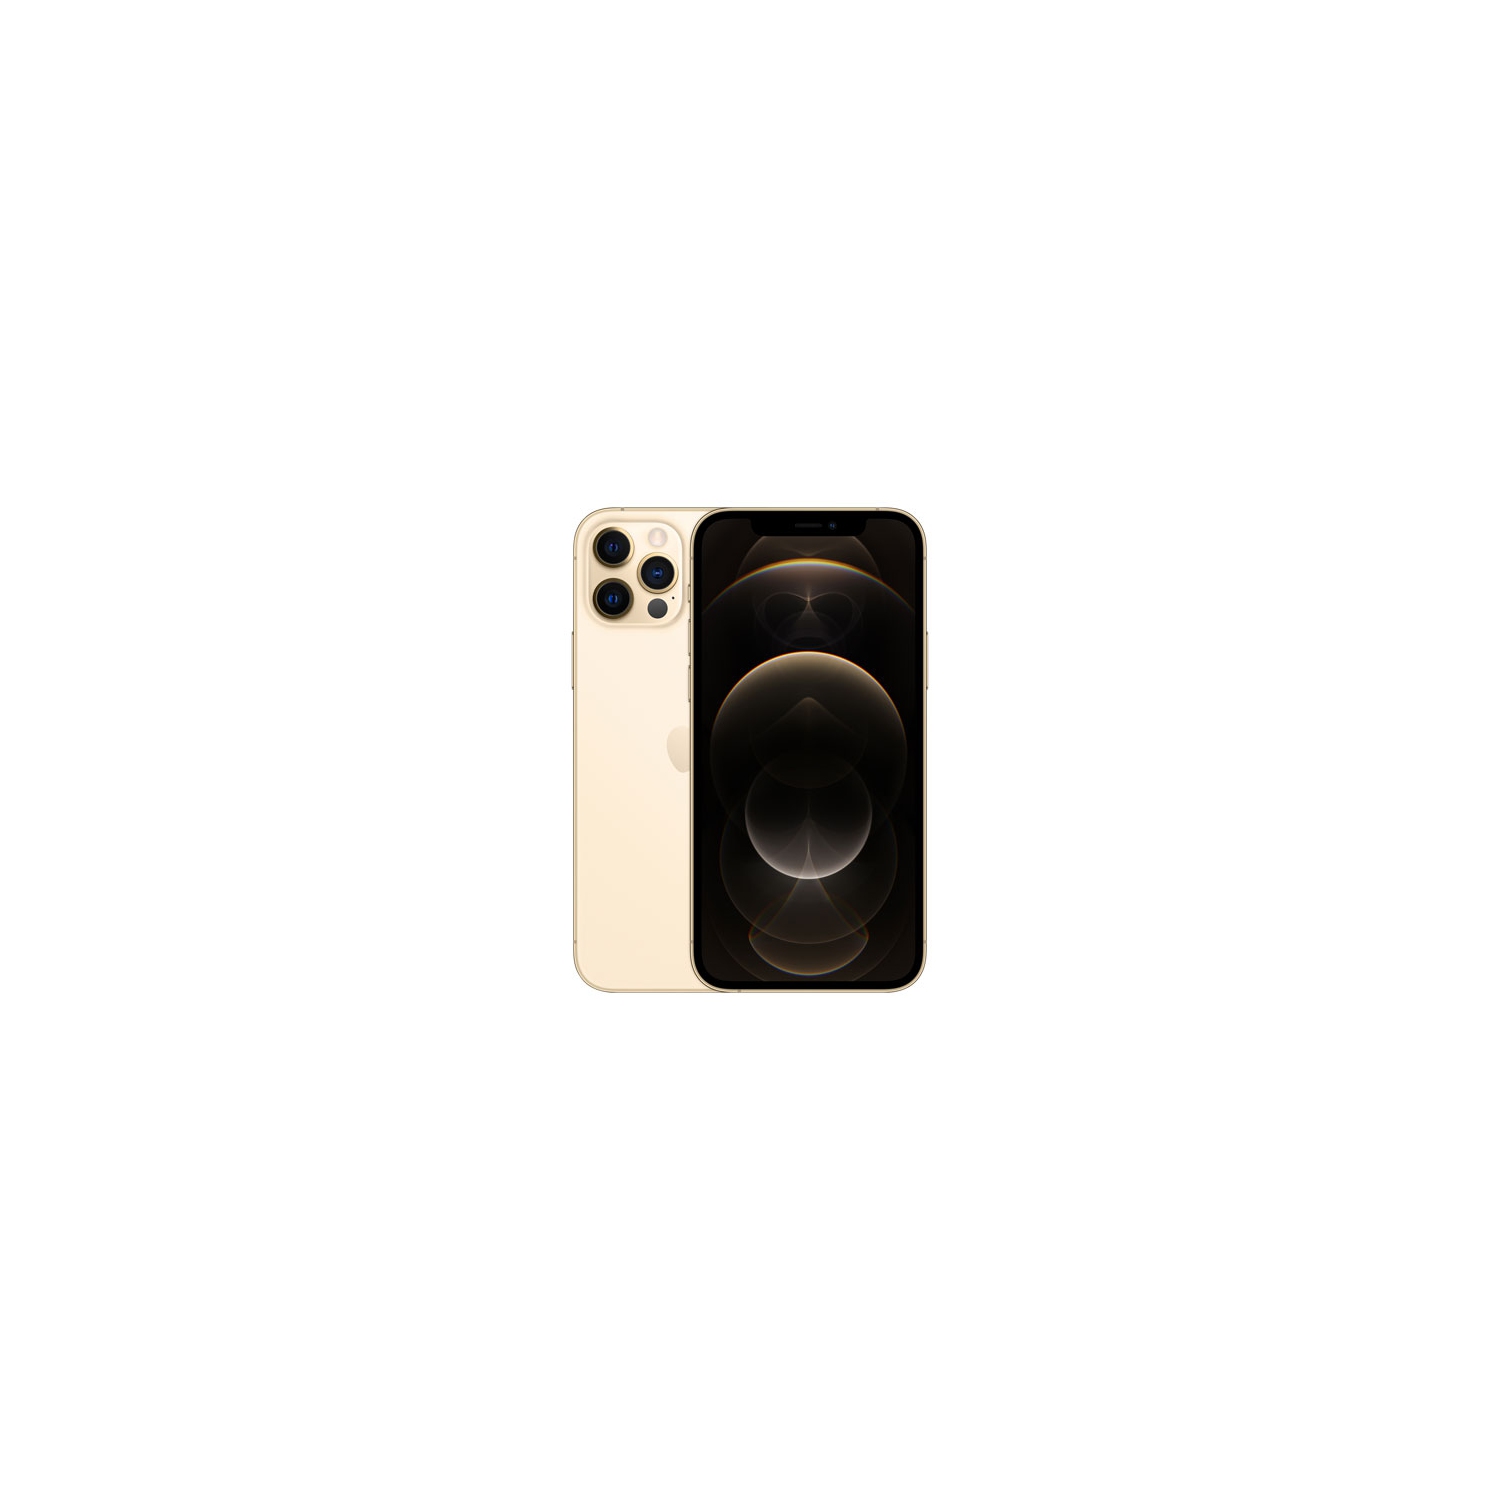 Apple iPhone 12 Pro 128GB Smartphone - Gold - Unlocked - Open Box